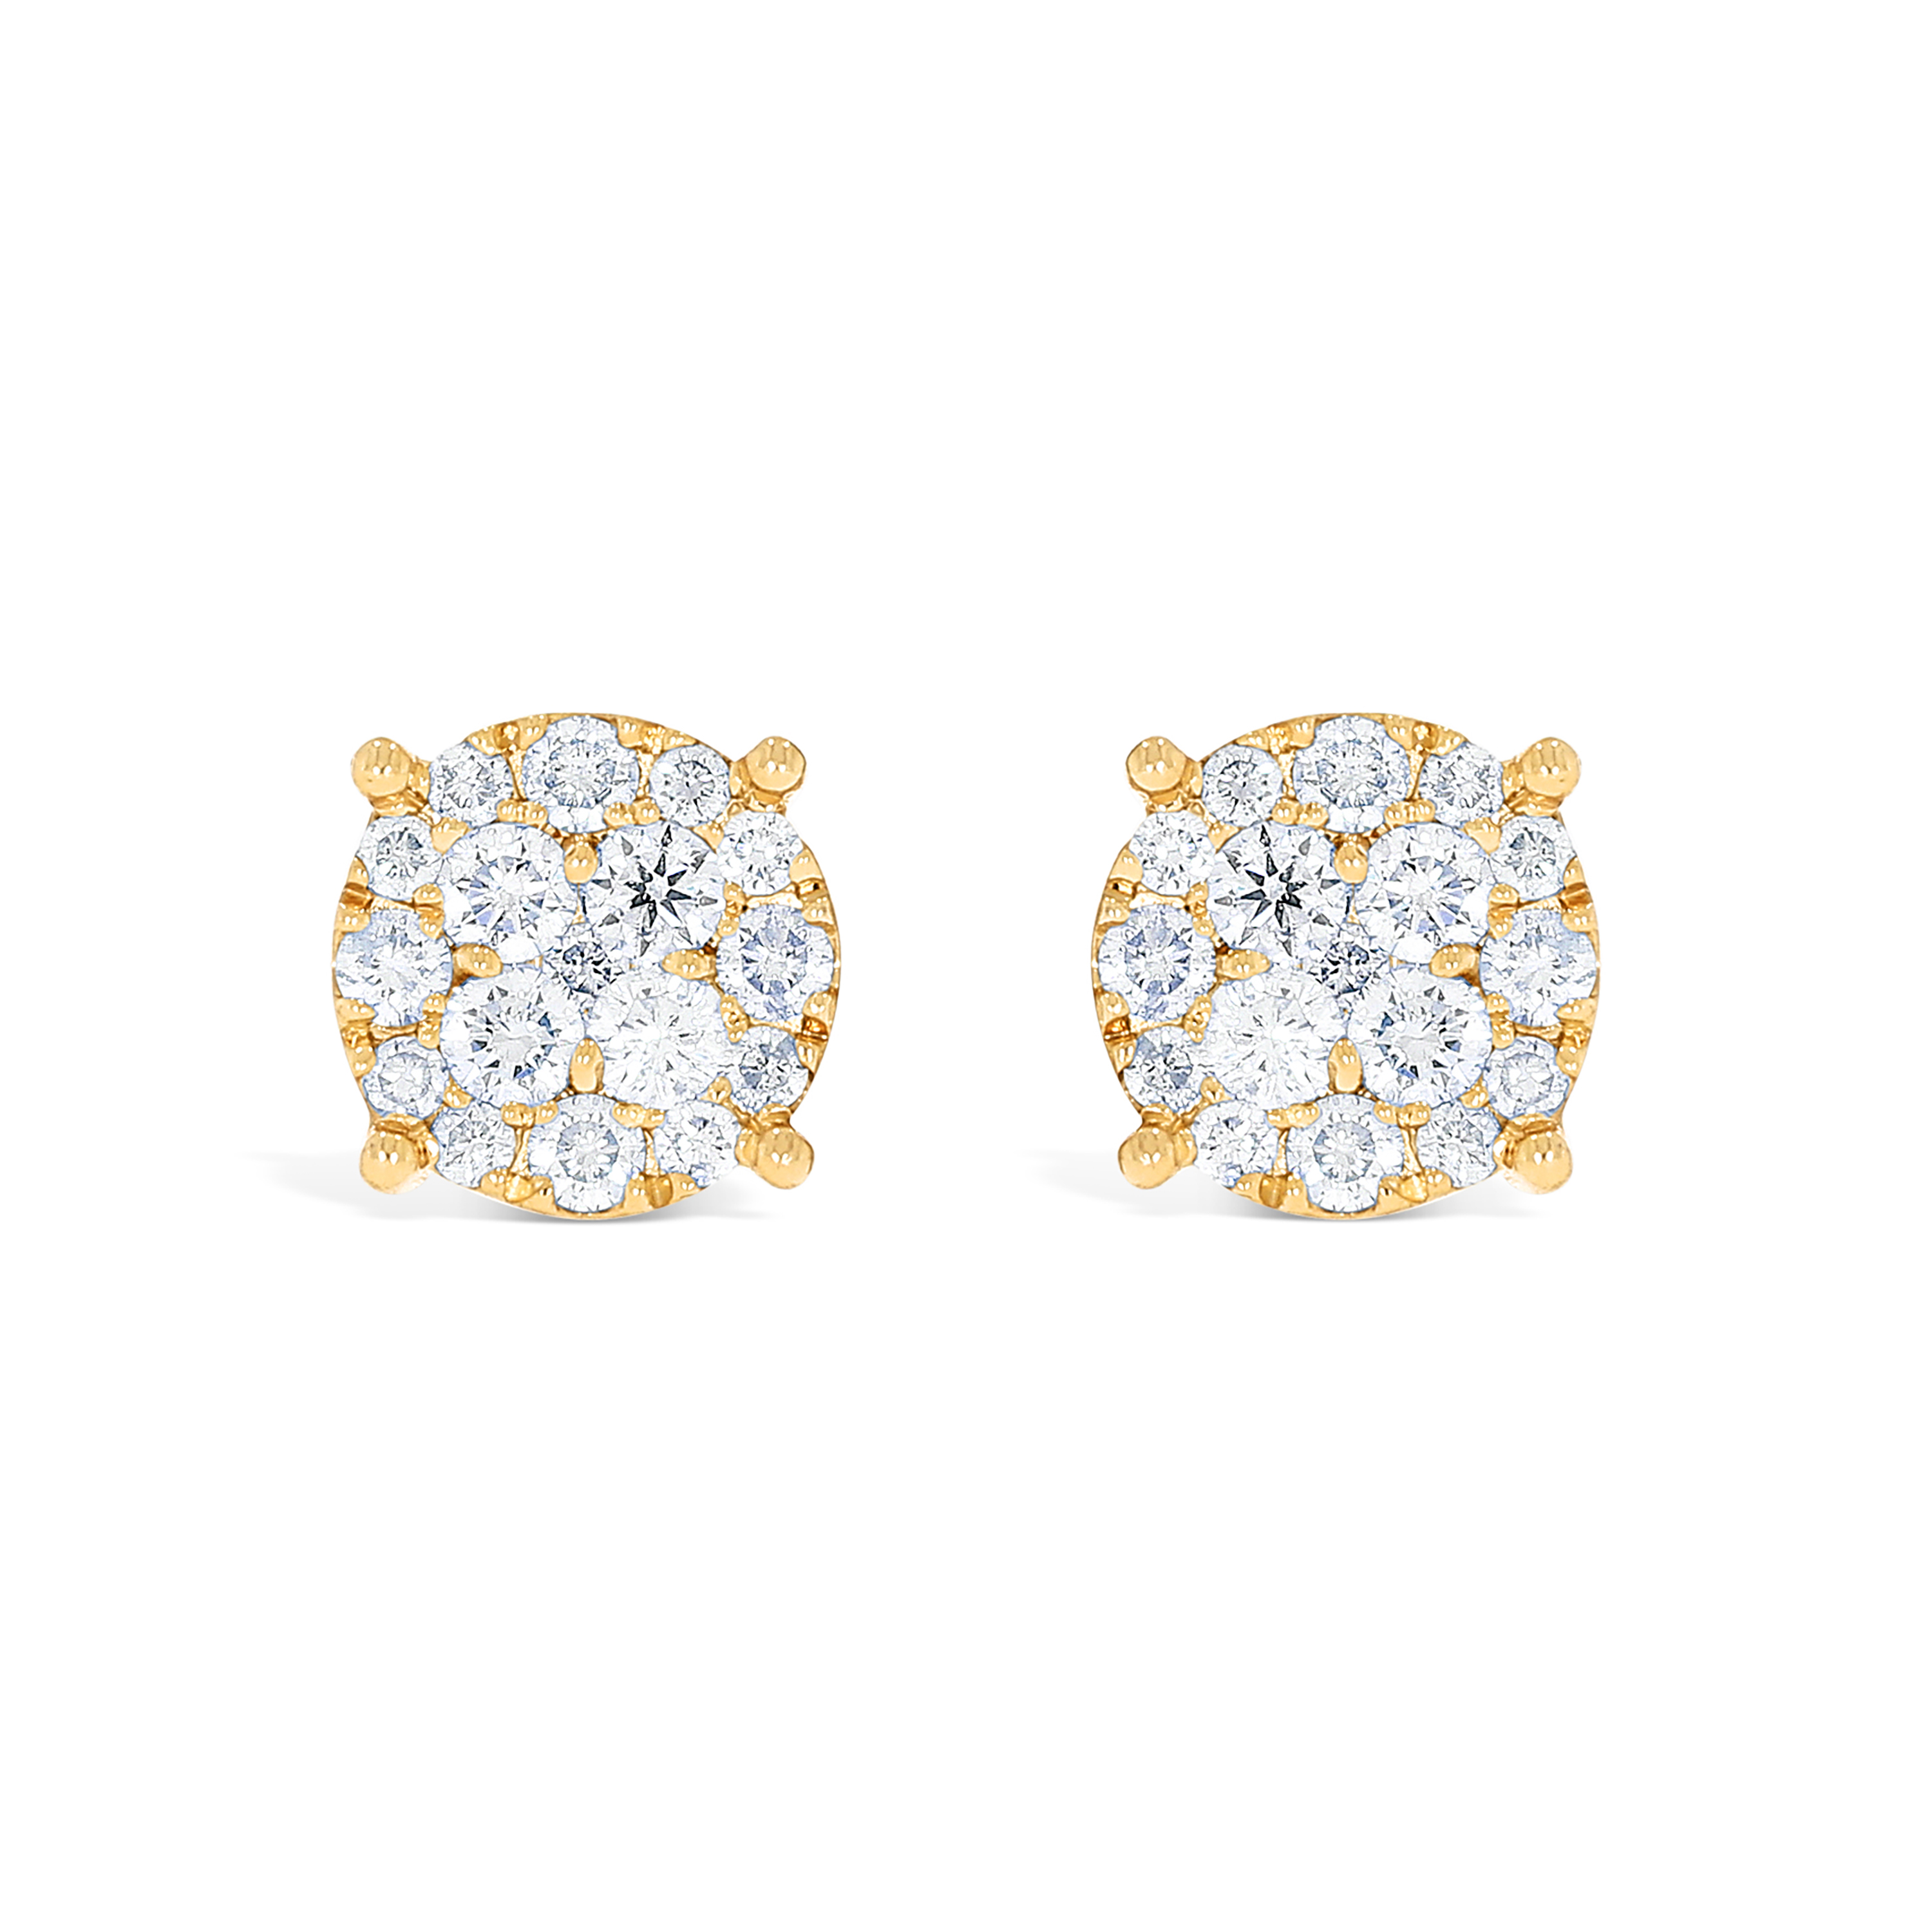 Round Diamond Earrings 0.27 ct. 10k Yellow Gold